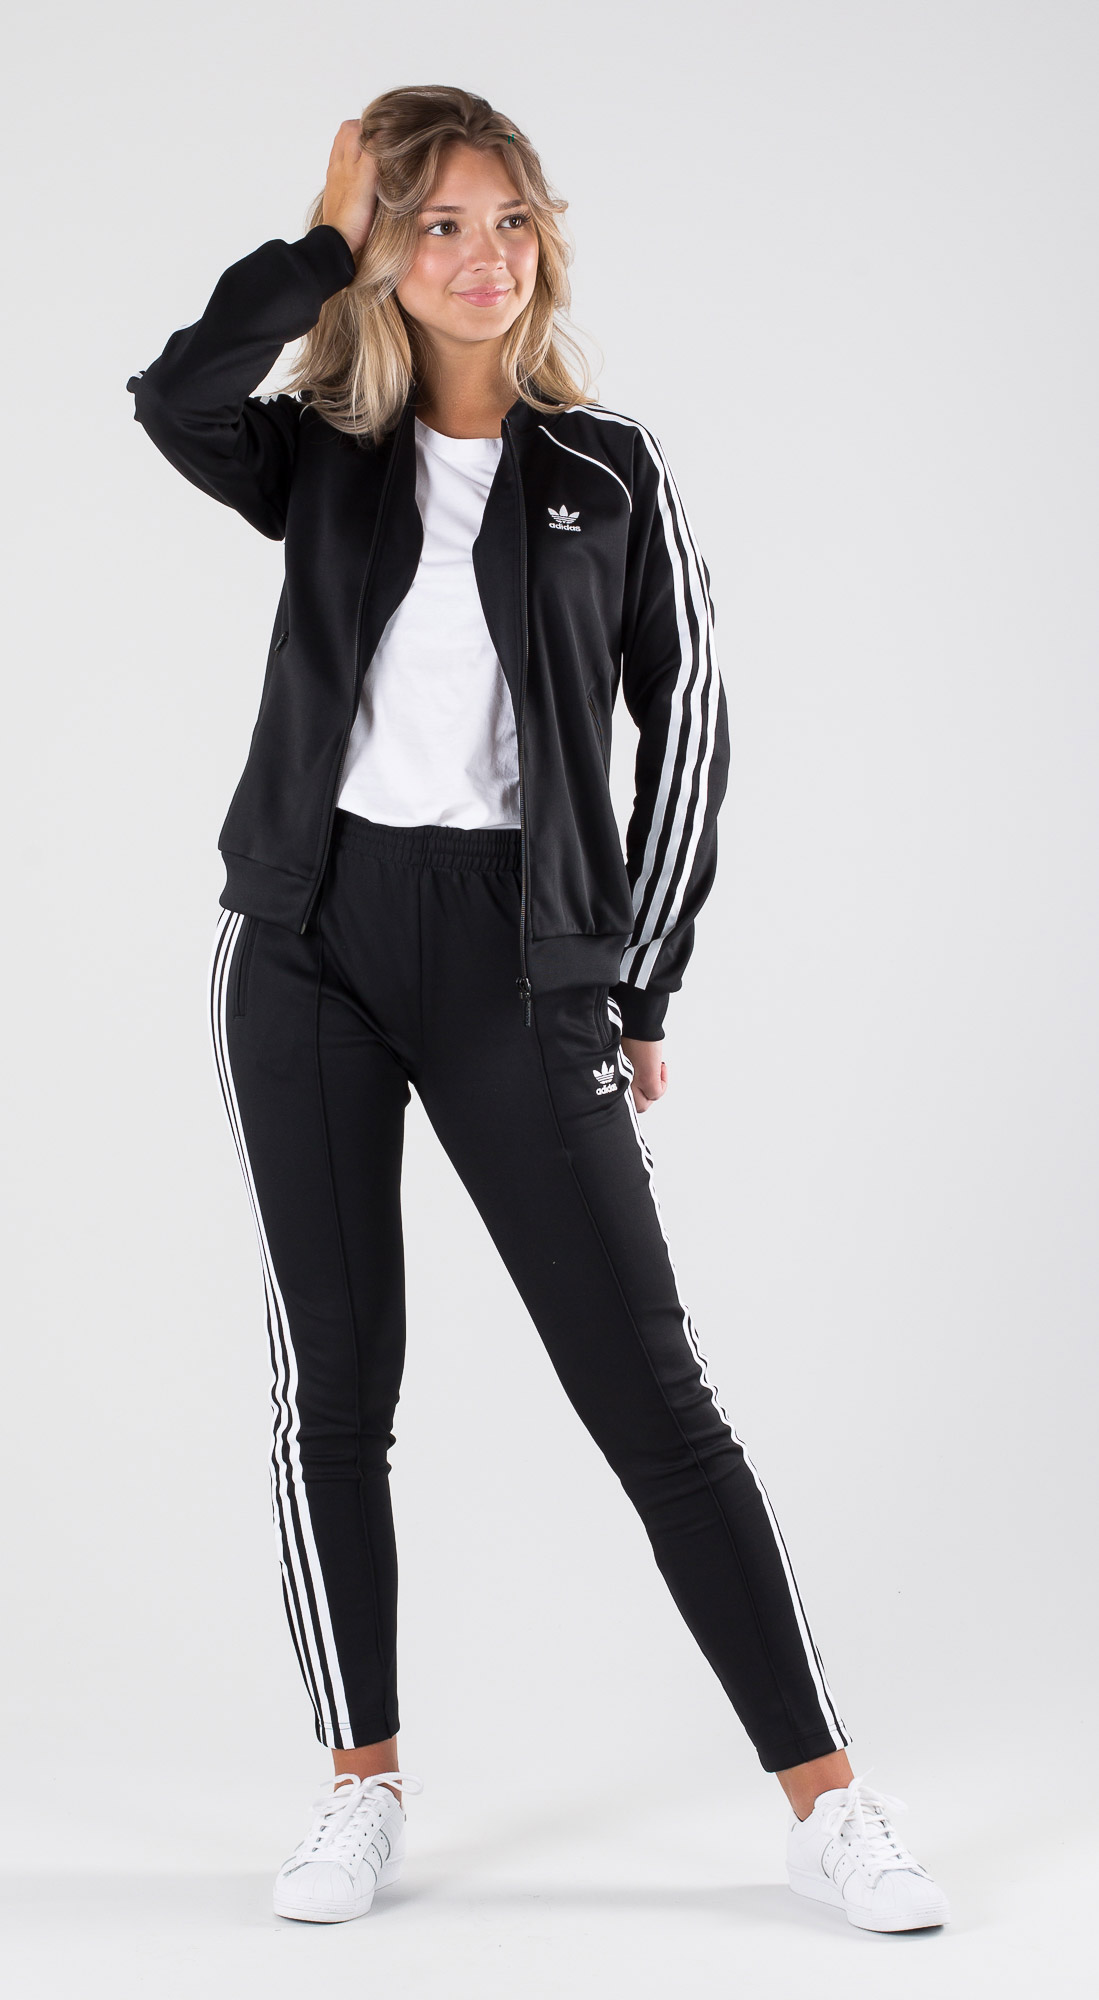 Adidas Originals Sst Tt Black Outfit - Ridestore